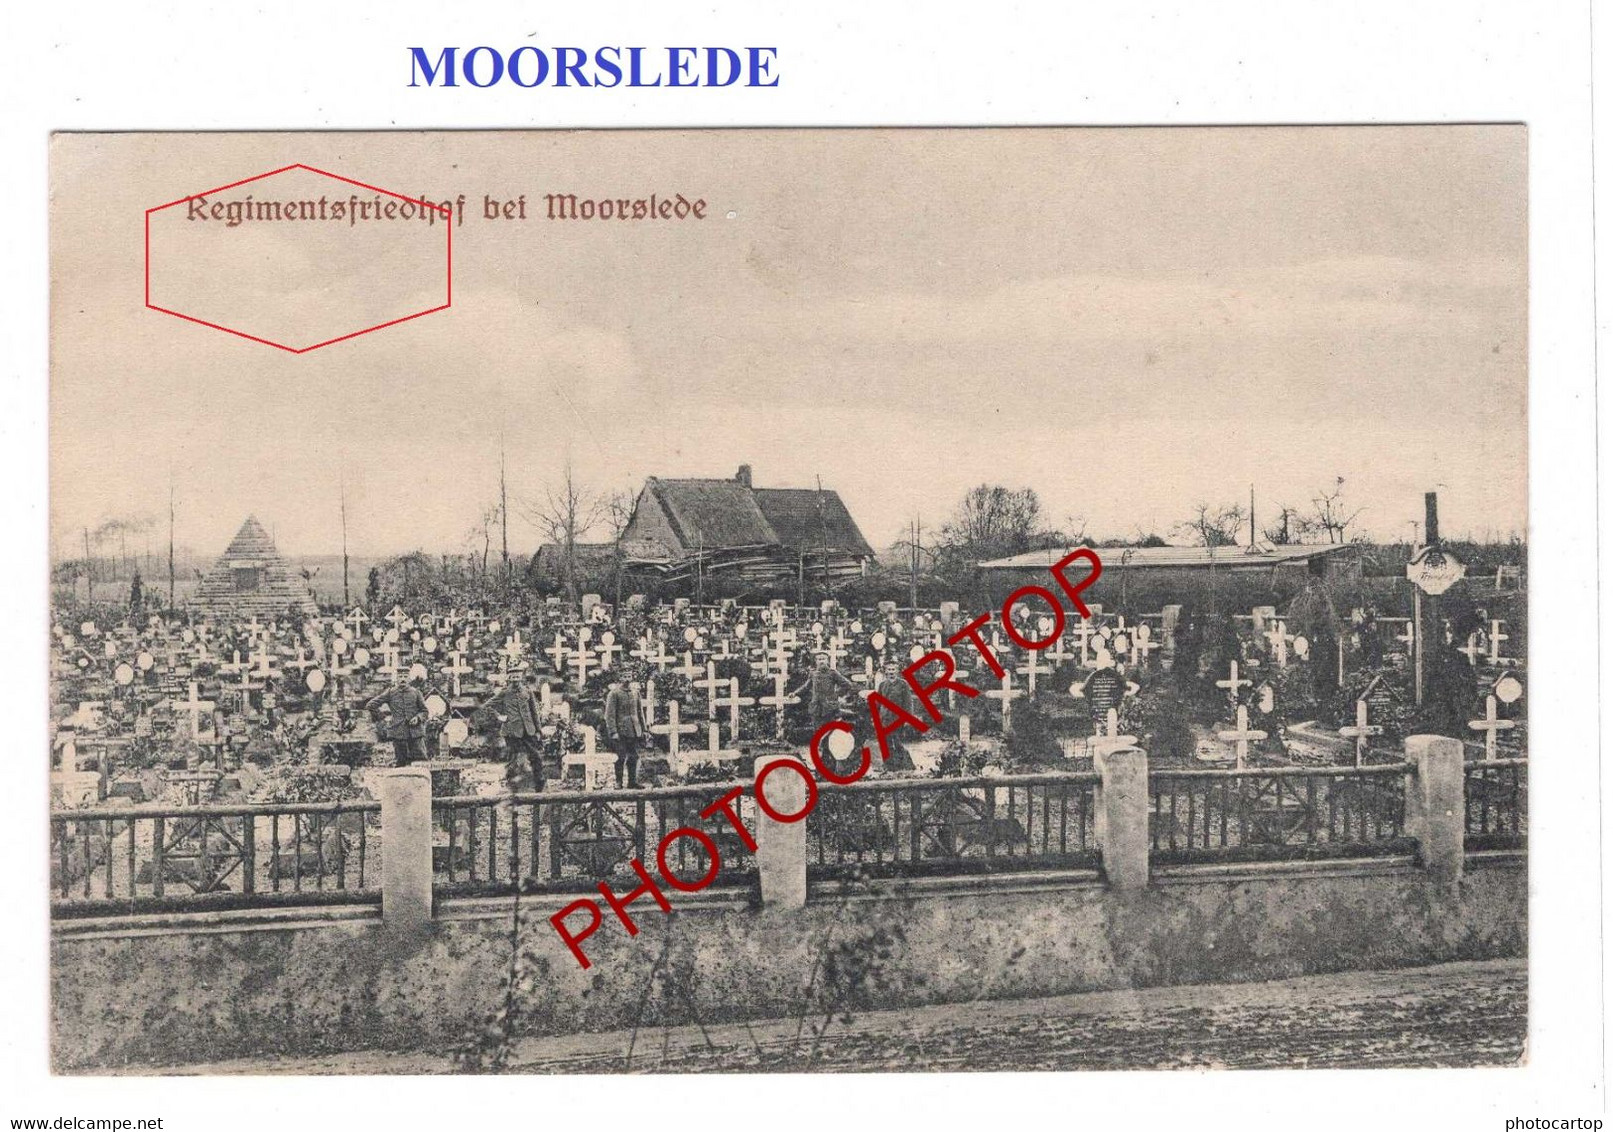 MOORSLEDE-Cimetiere Allemand-CARTE Imprimee Allemande-Guerre 14-18-1 WK-Belgien-FLANDERN-Militaria- - Moorslede